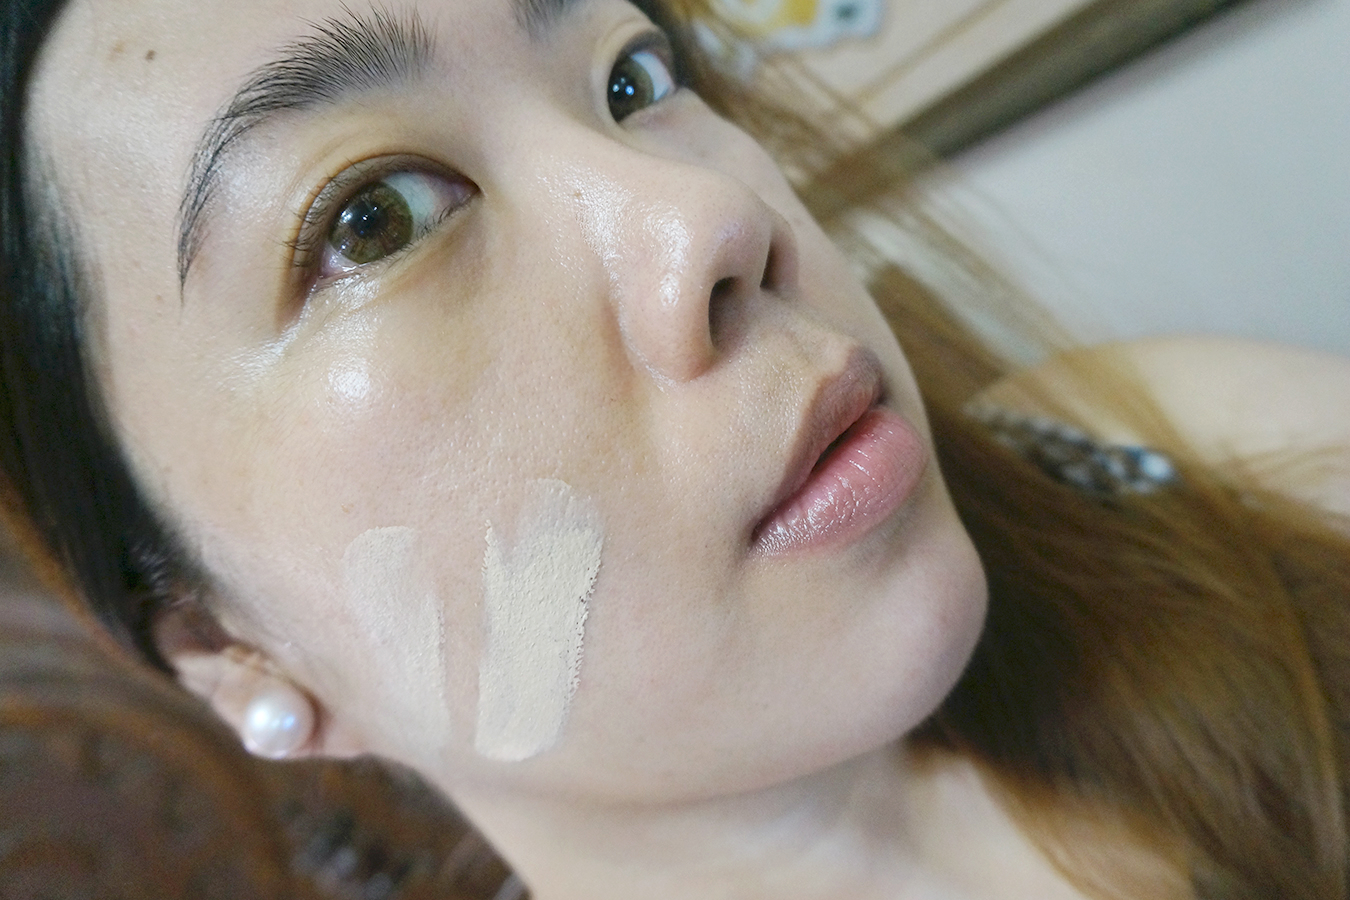 Revlon Colorstay Foundation 24hrs Makeup 30ml | RRP 12.49 | (Buff 150  Combination/Oily Skin) by Revlon